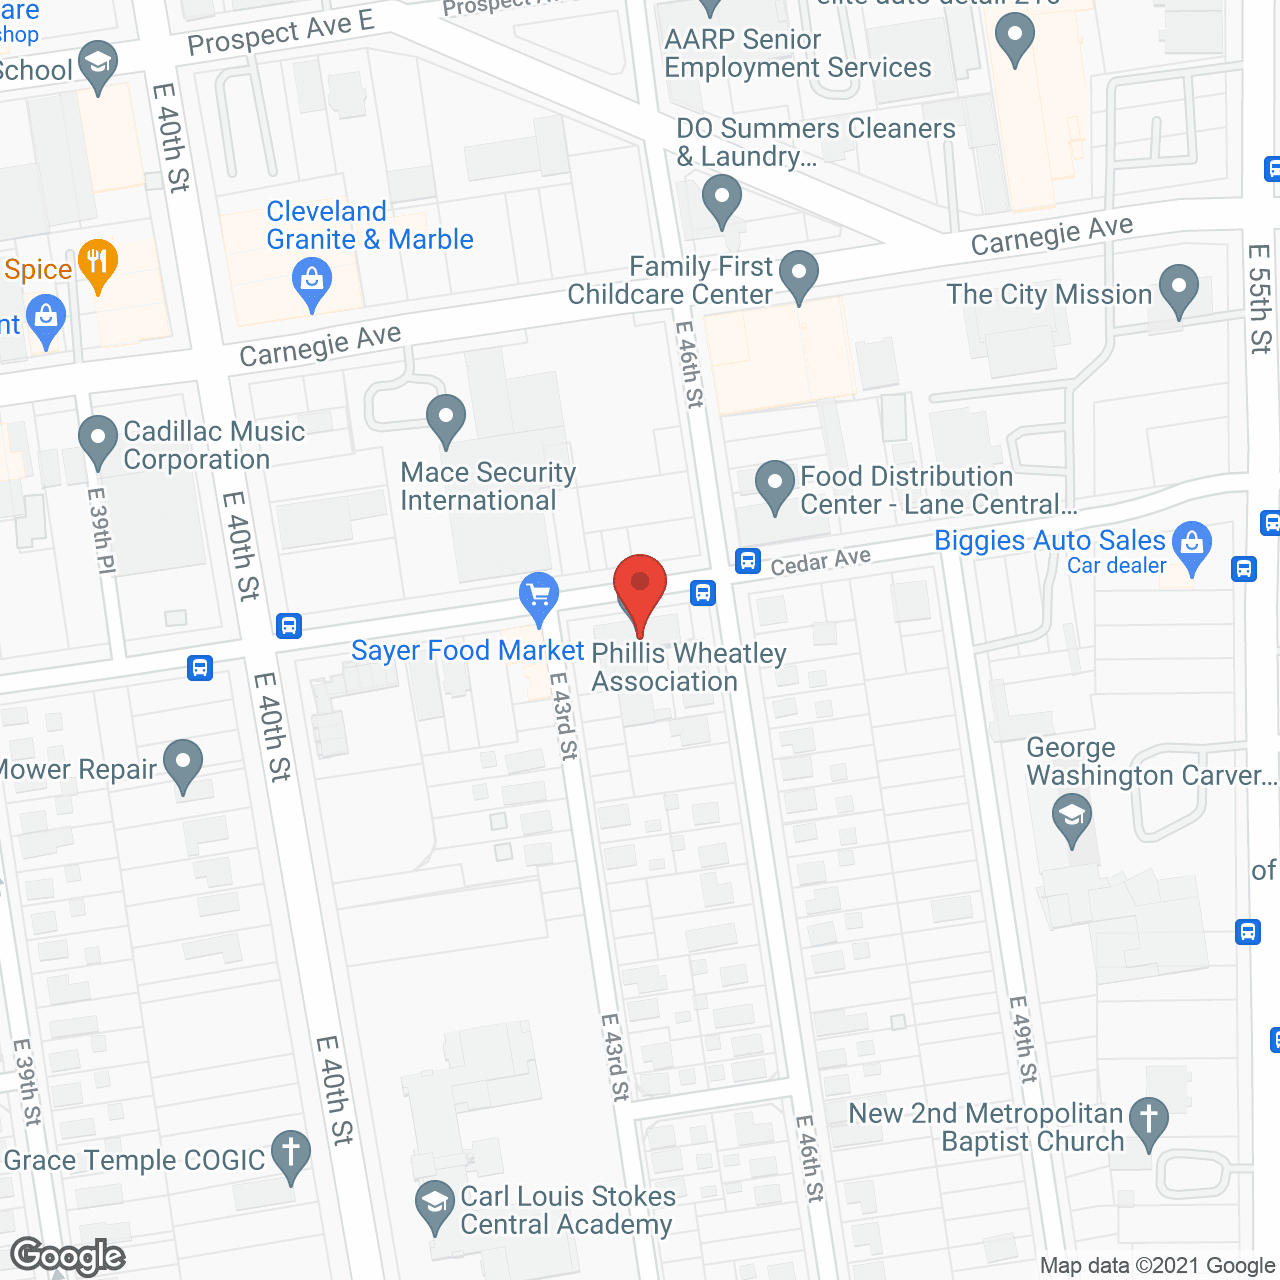 Emeritus House in google map